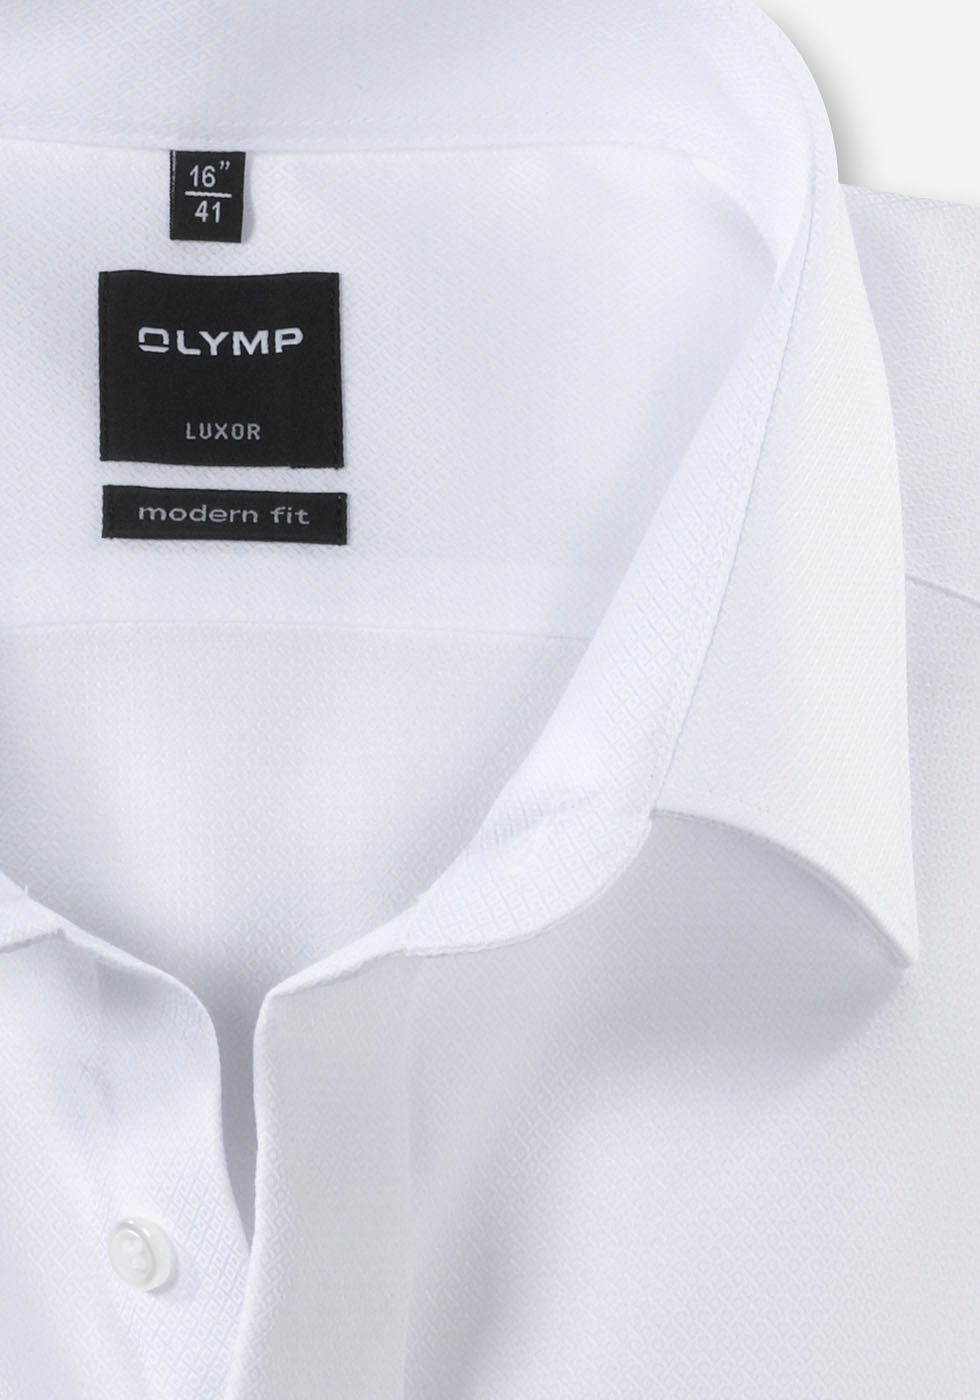 OLYMP weiss Luxor Businesshemd modern fit